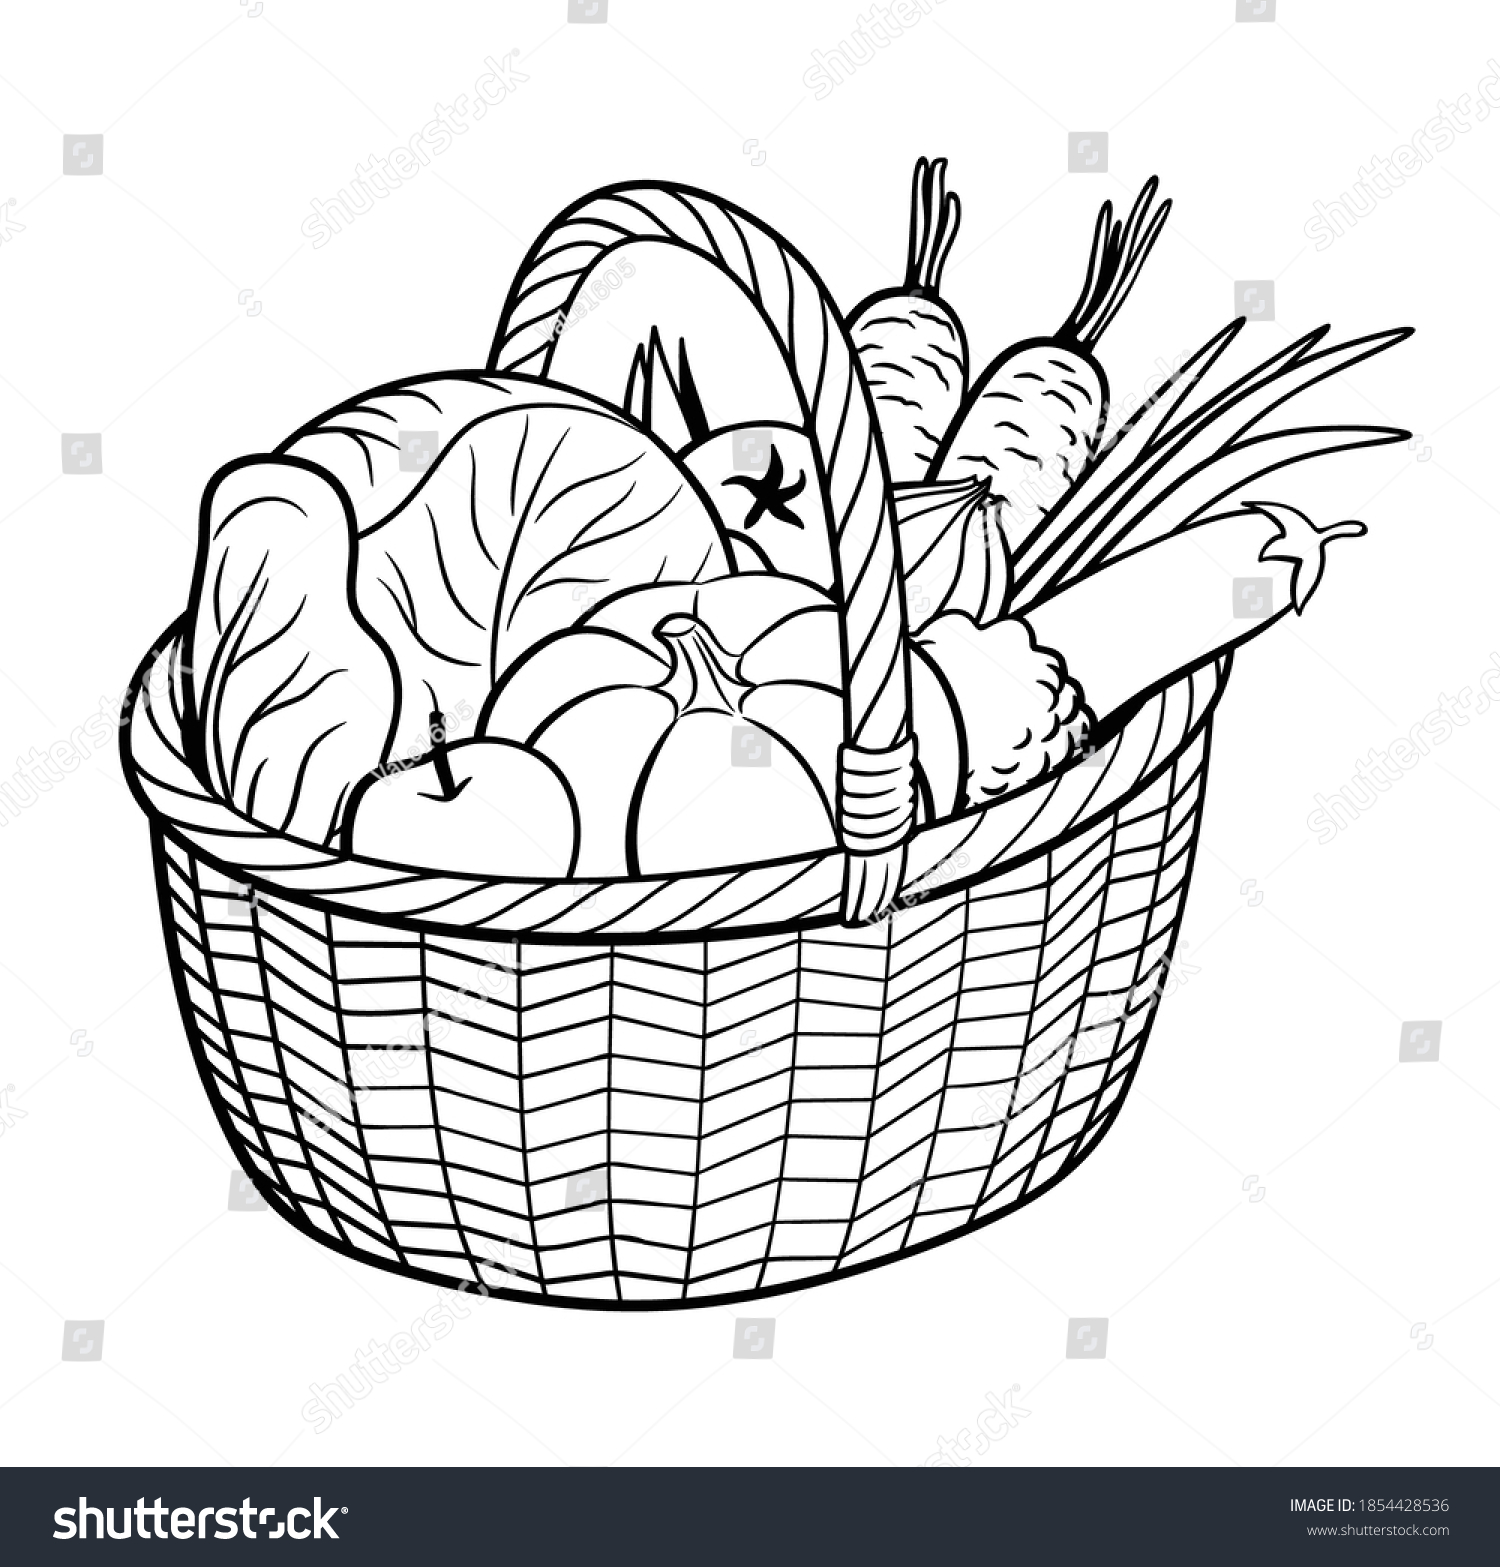 2,176 Vegetable basket outline Images, Stock Photos & Vectors